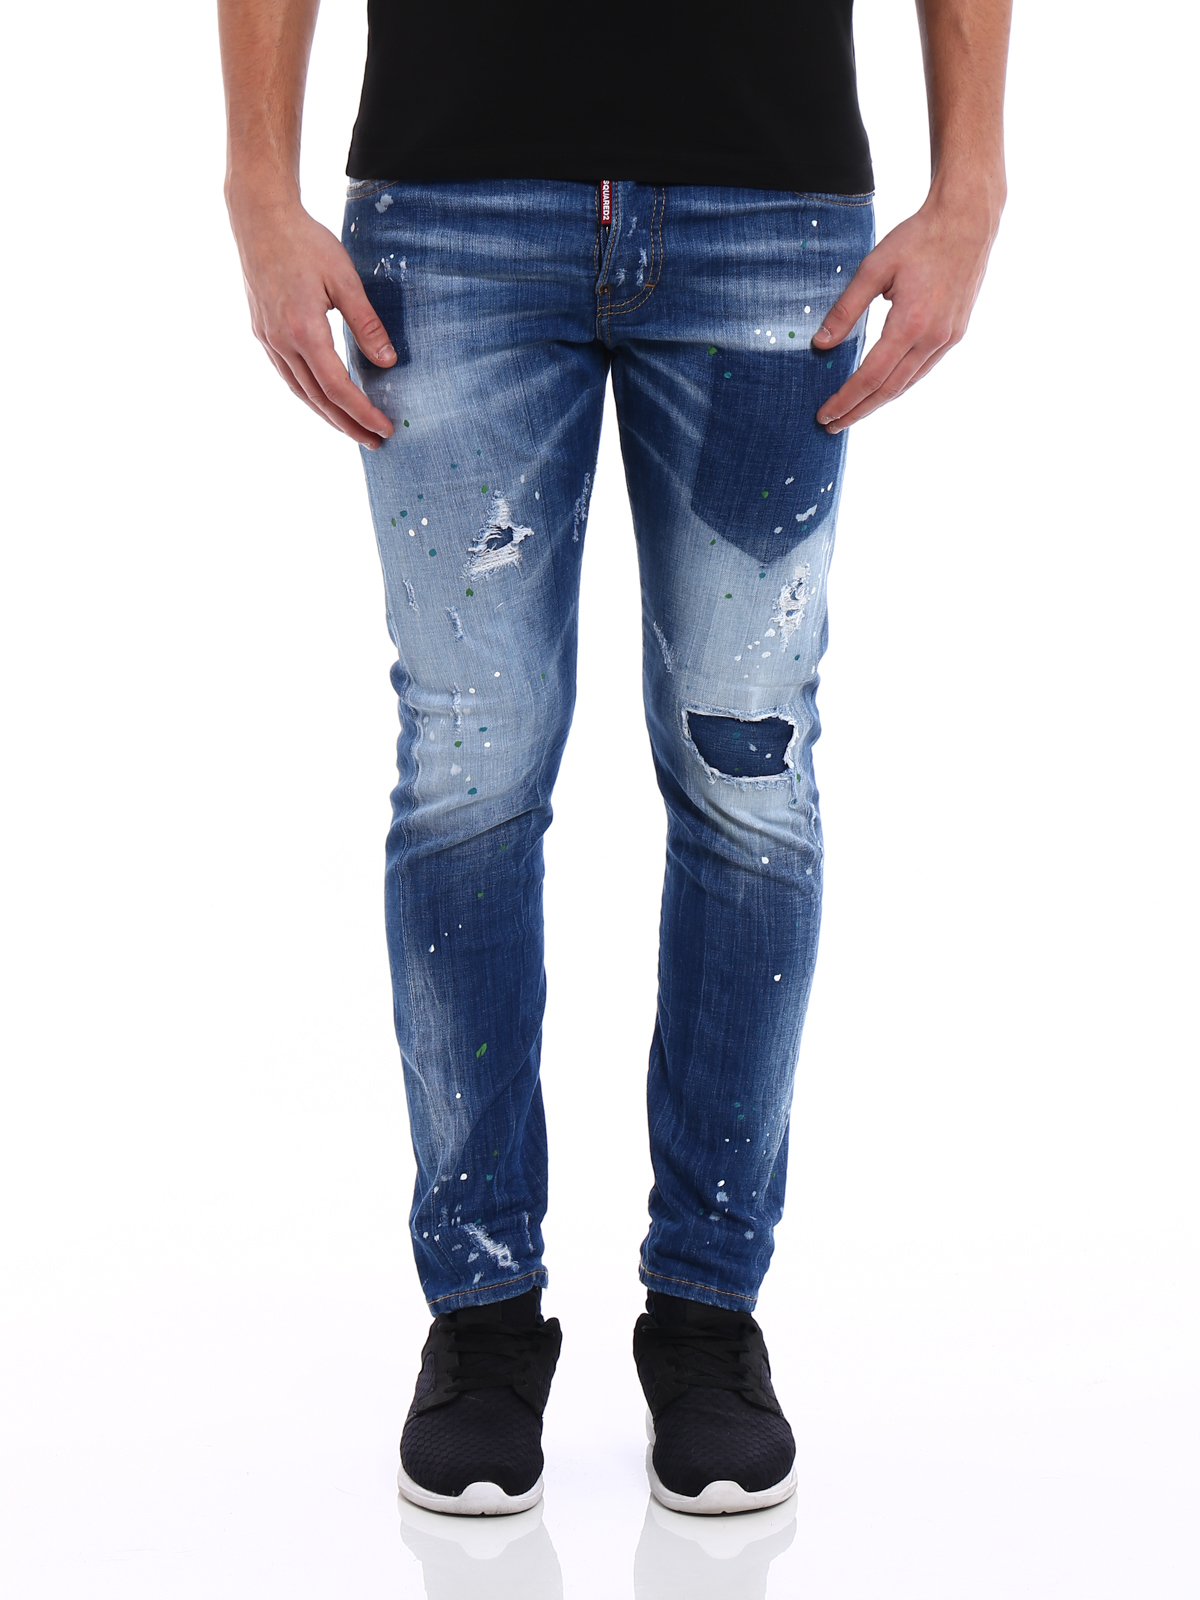 Opinion Masaccio Make life Skinny jeans Dsquared2 - Sexy Twist light wash jeans - S74LB0322S30342470